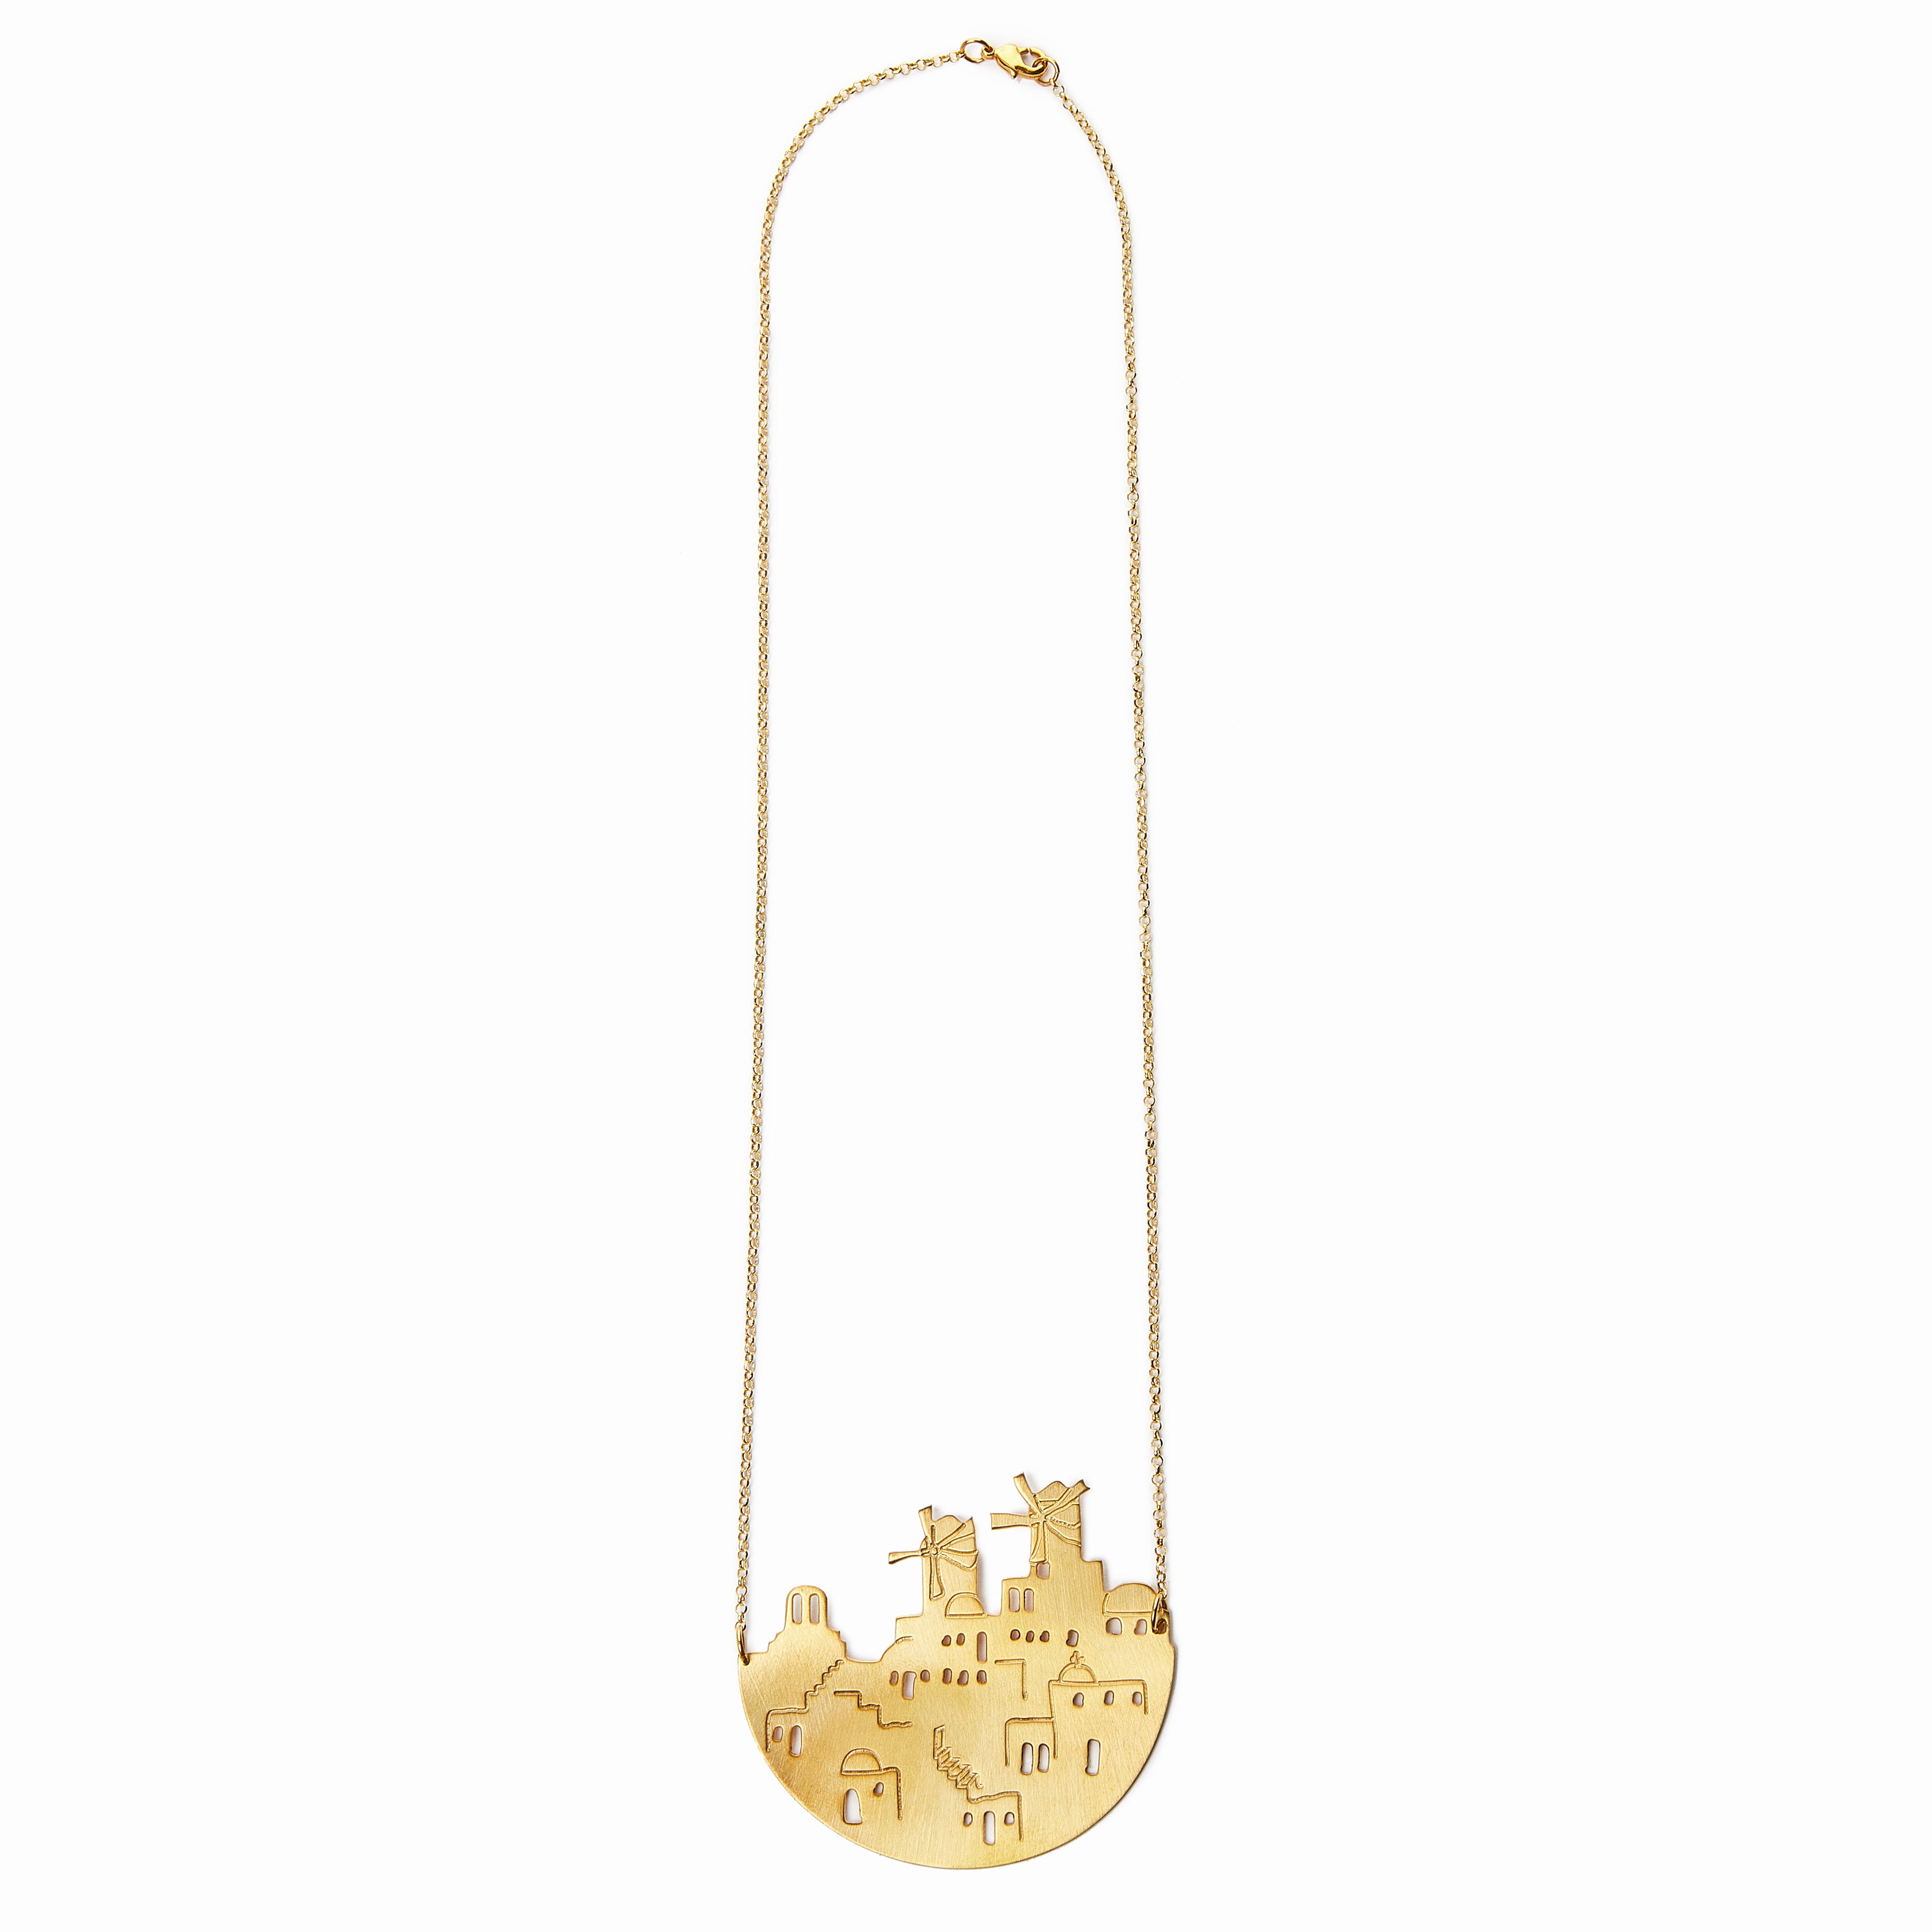 Santorini chain necklace